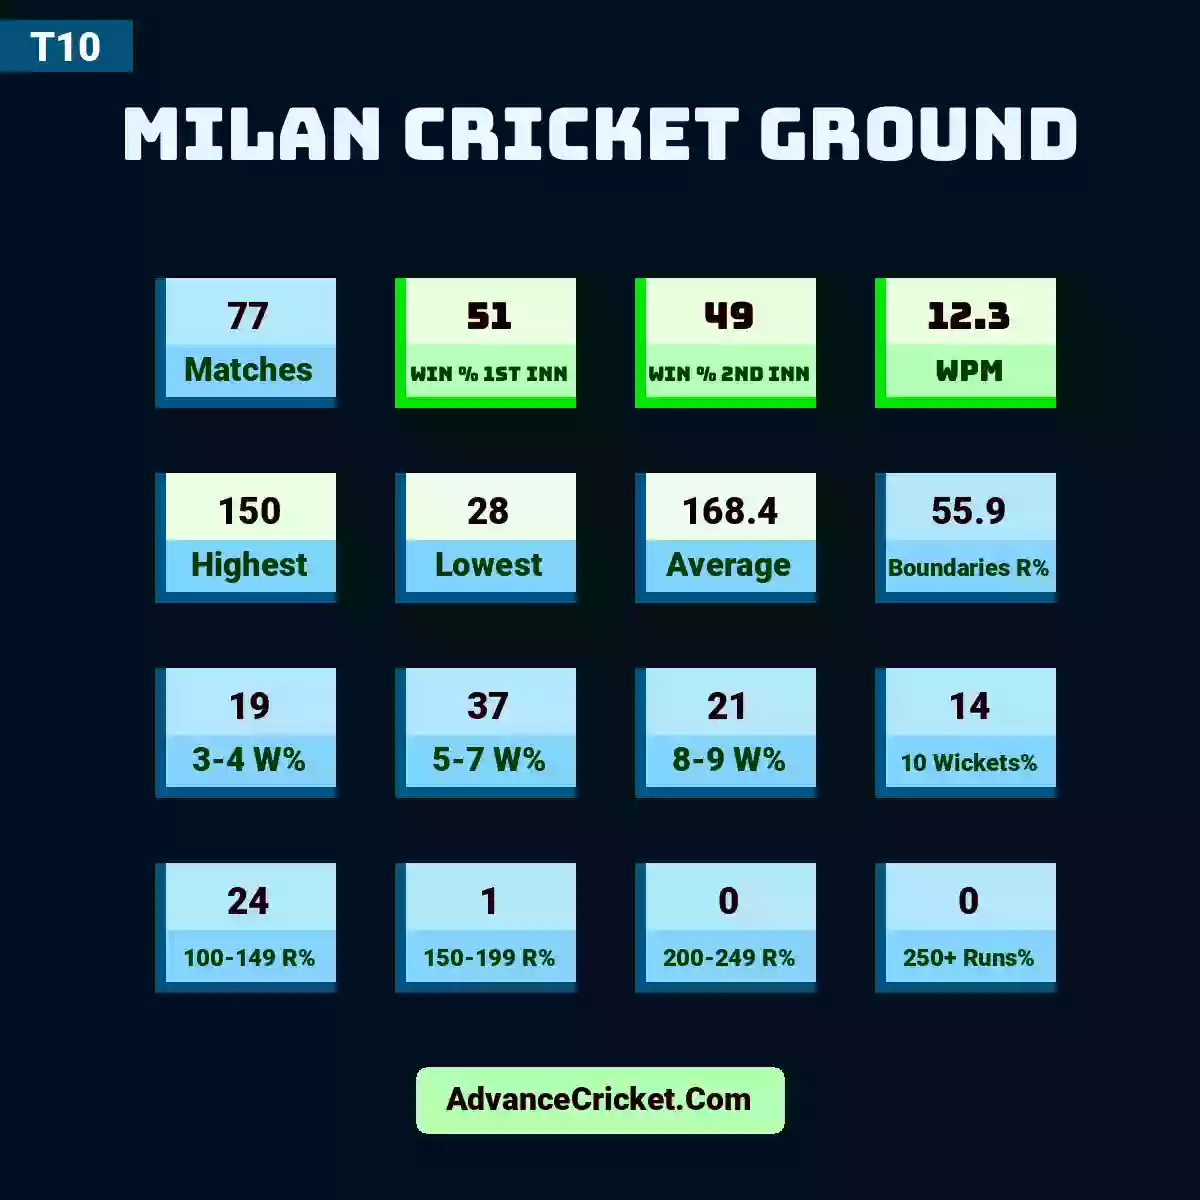 Image showing Milan Cricket Ground with Matches: 77, Win % 1st Inn: 51, Win % 2nd Inn: 49, WPM: 12.3, Highest: 150, Lowest: 28, Average: 168.4, Boundaries R%: 55.9, 3-4 W%: 19, 5-7 W%: 37, 8-9 W%: 21, 10 Wickets%: 14, 100-149 R%: 24, 150-199 R%: 1, 200-249 R%: 0, 250+ Runs%: 0.